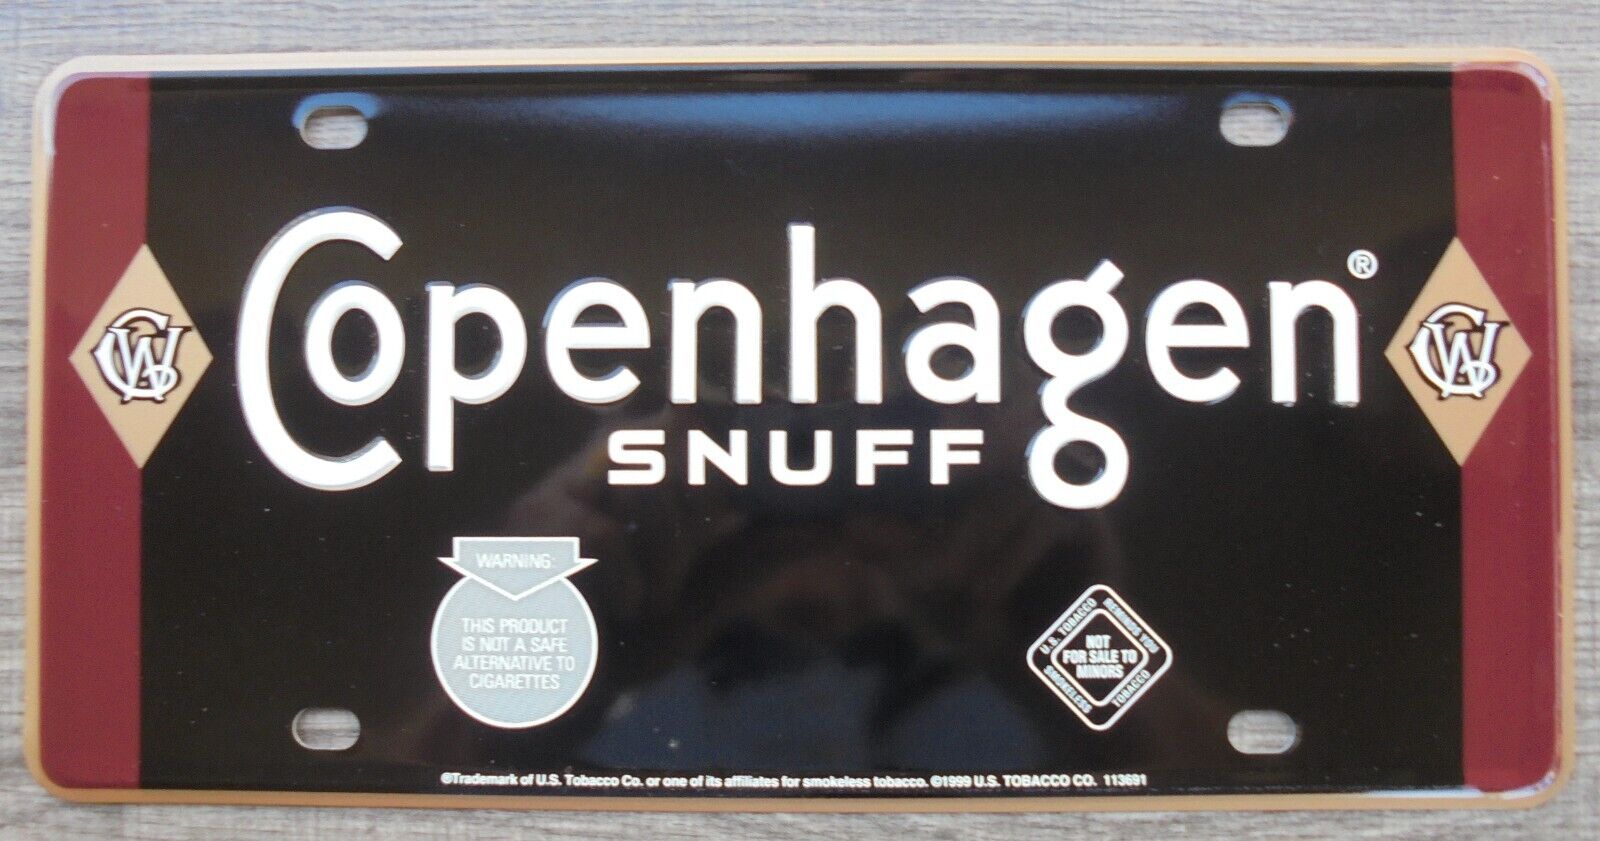 Copenhagen snuff smokeless tobacco promotional license plate New/Mint